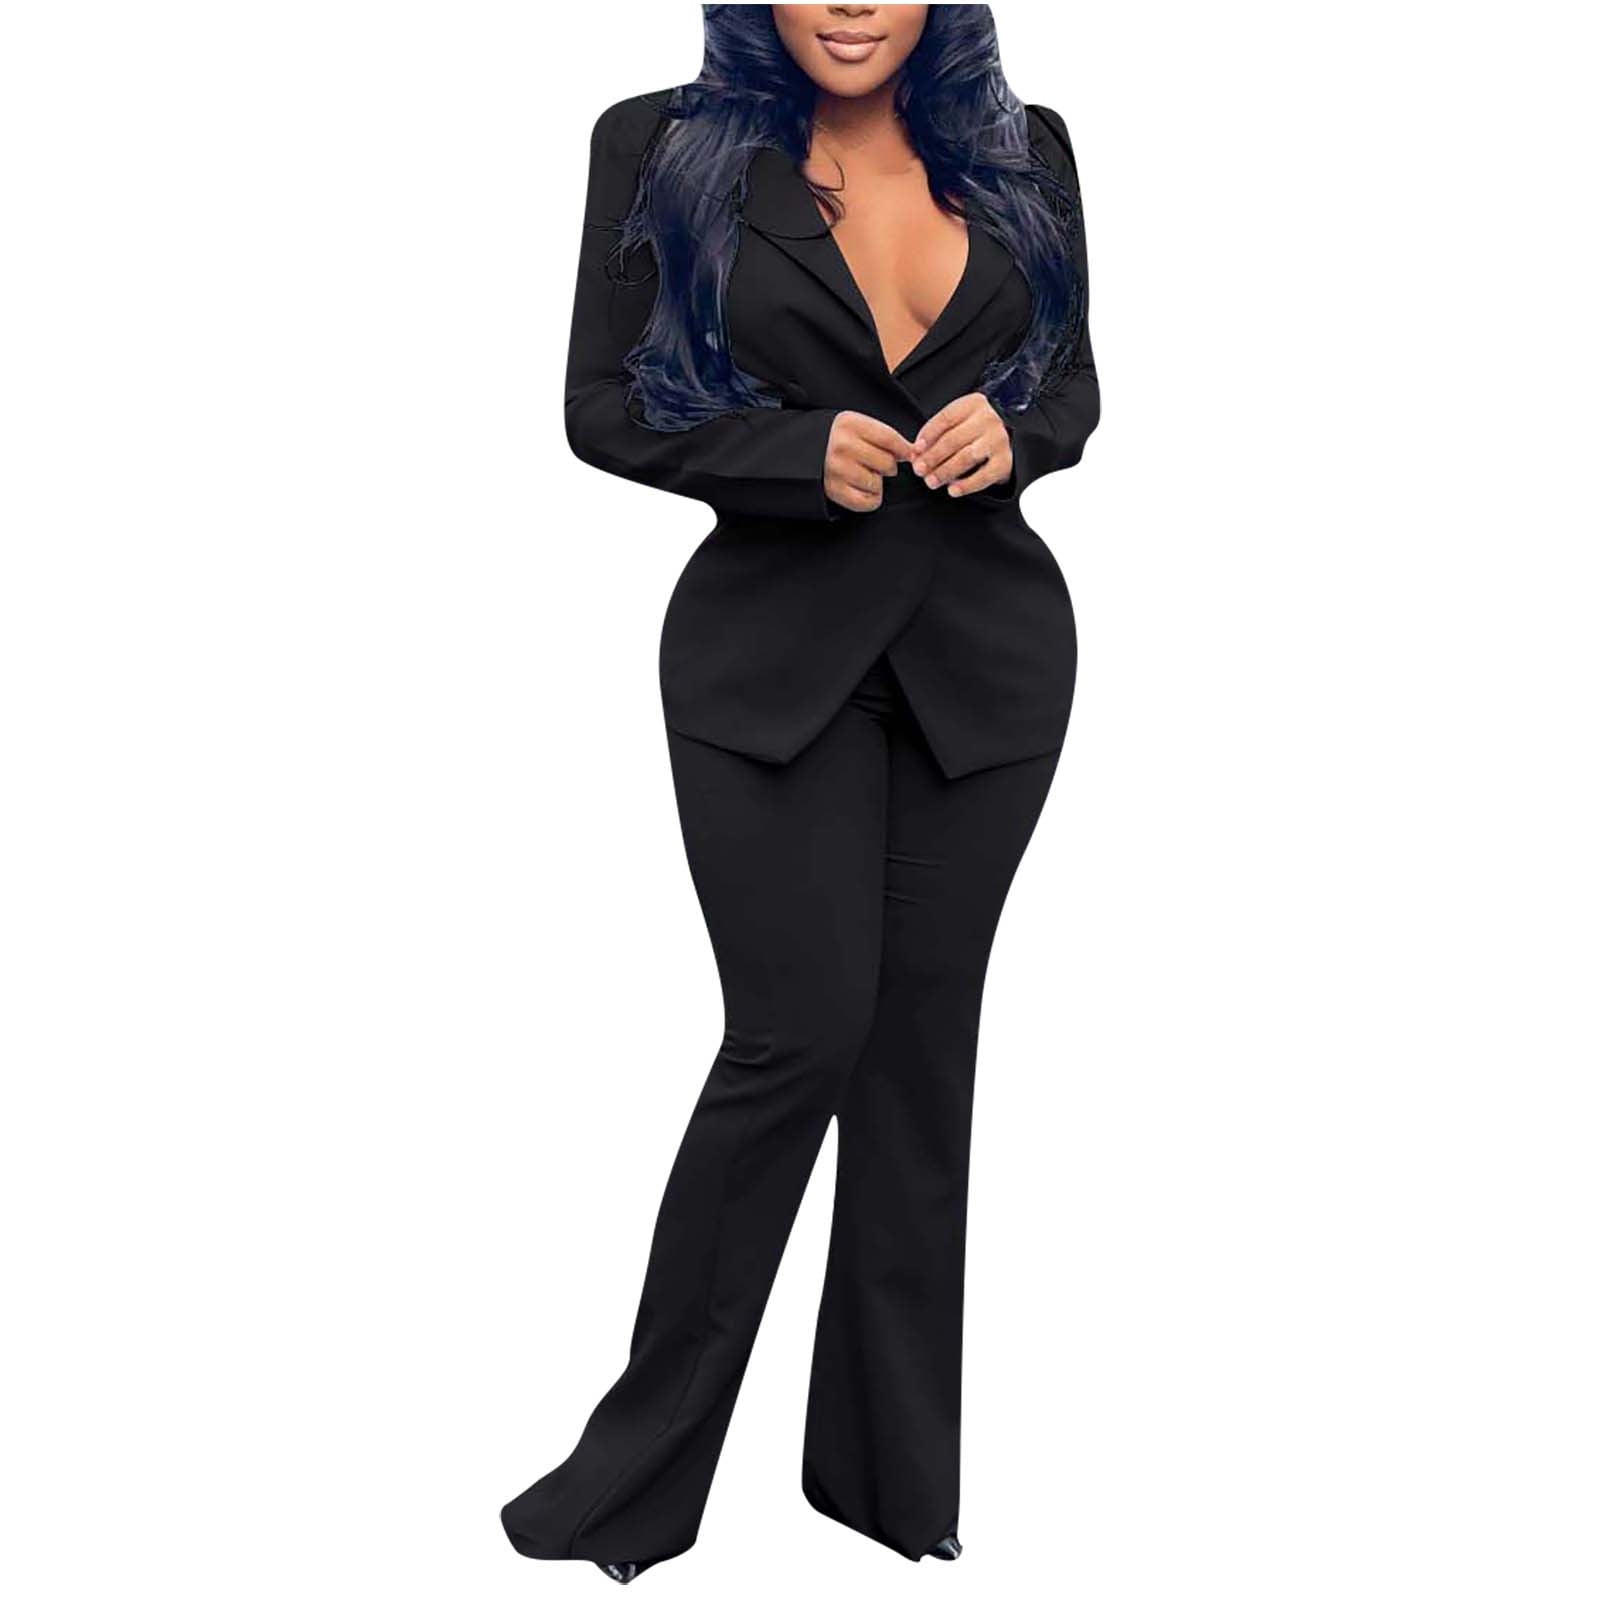 Plus Size Women Black Suits Formal Ladies Office Work Wear 2 Pieces Outfits